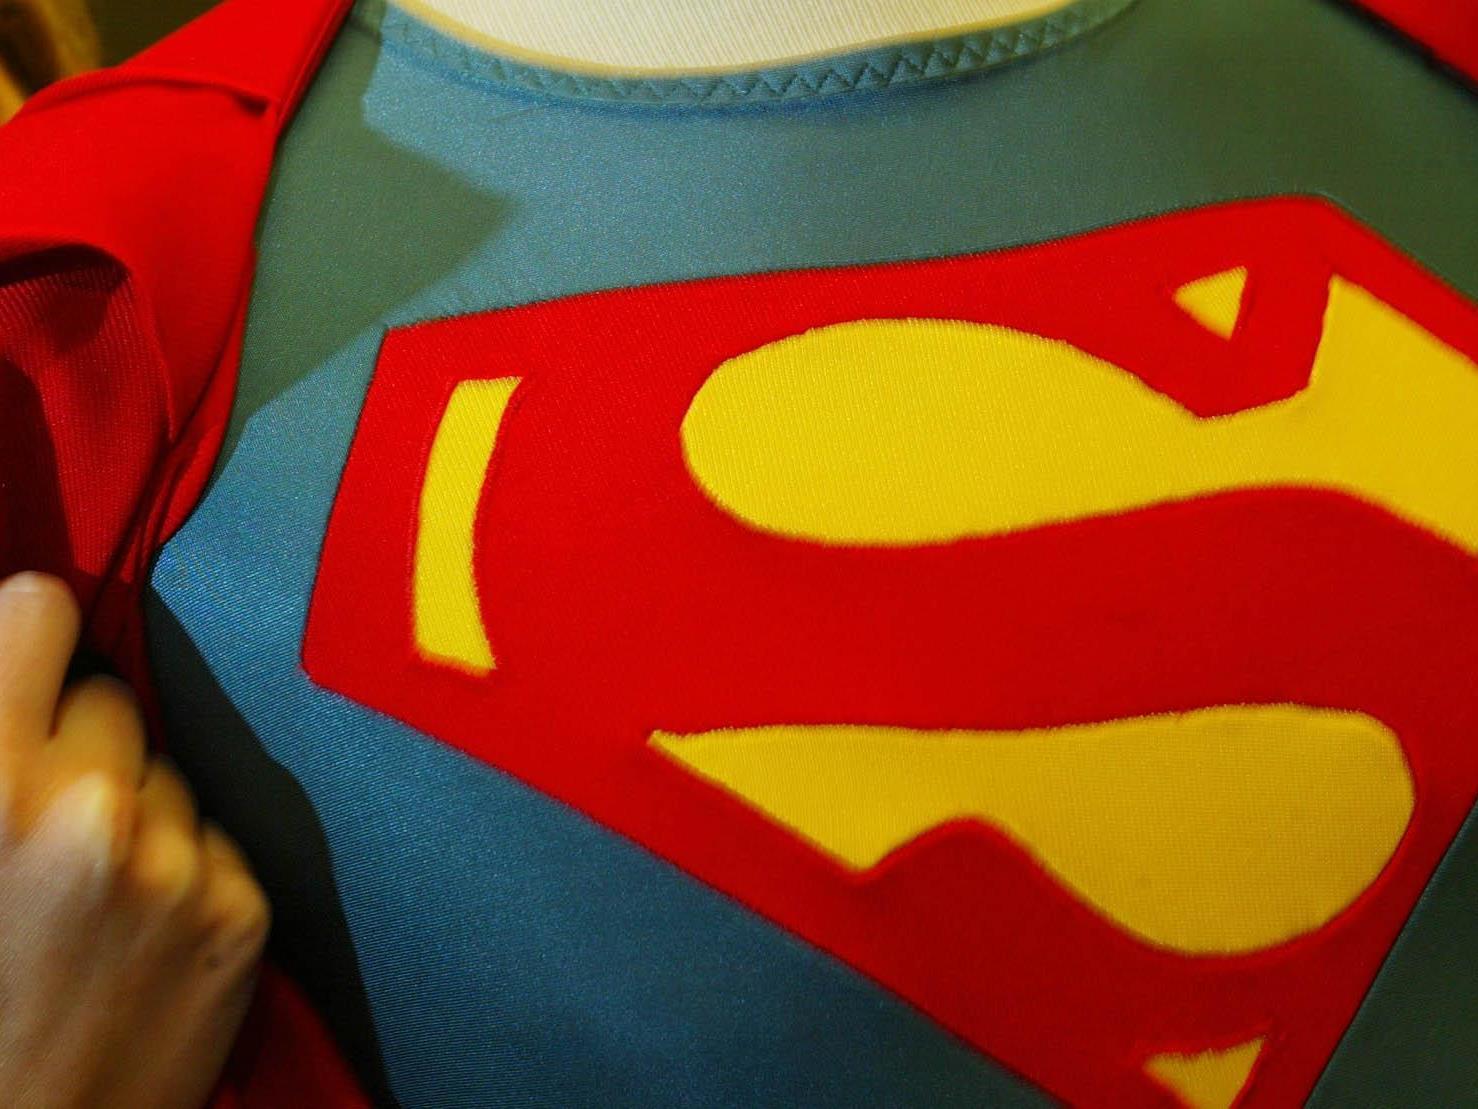 Das Design der neuen Droge lehnt sich an das "Superman"-Logo an.